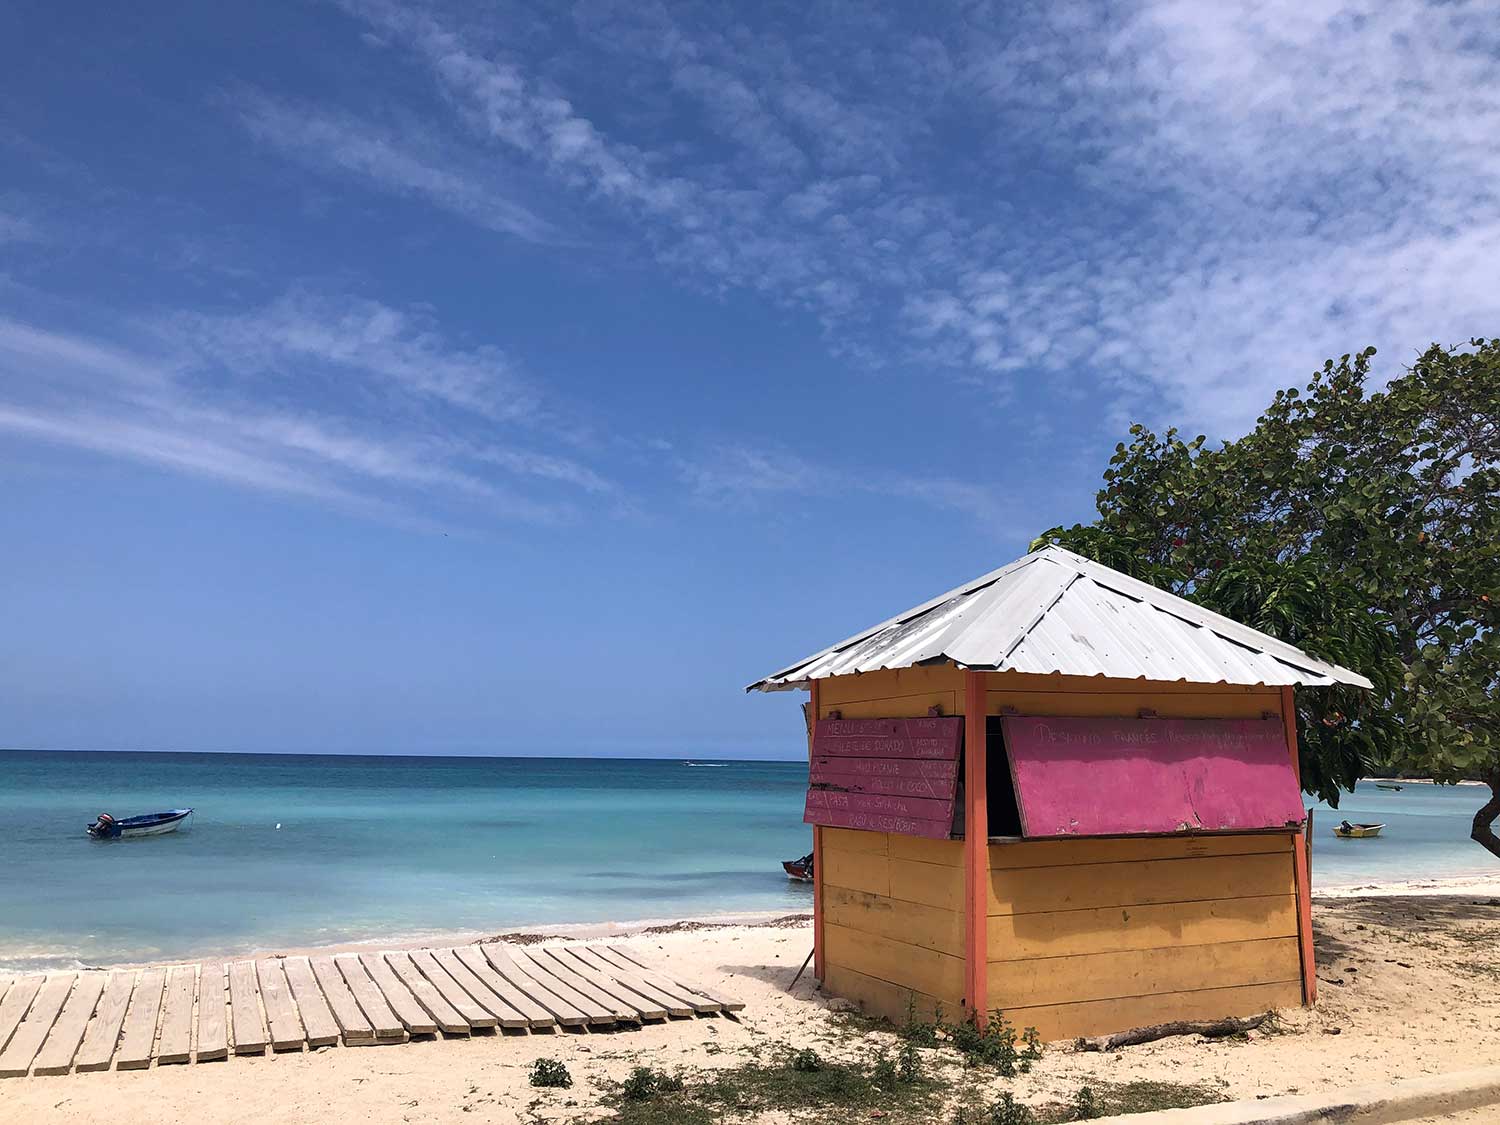 A small hut on the beach of the island Cayo Paraiso.